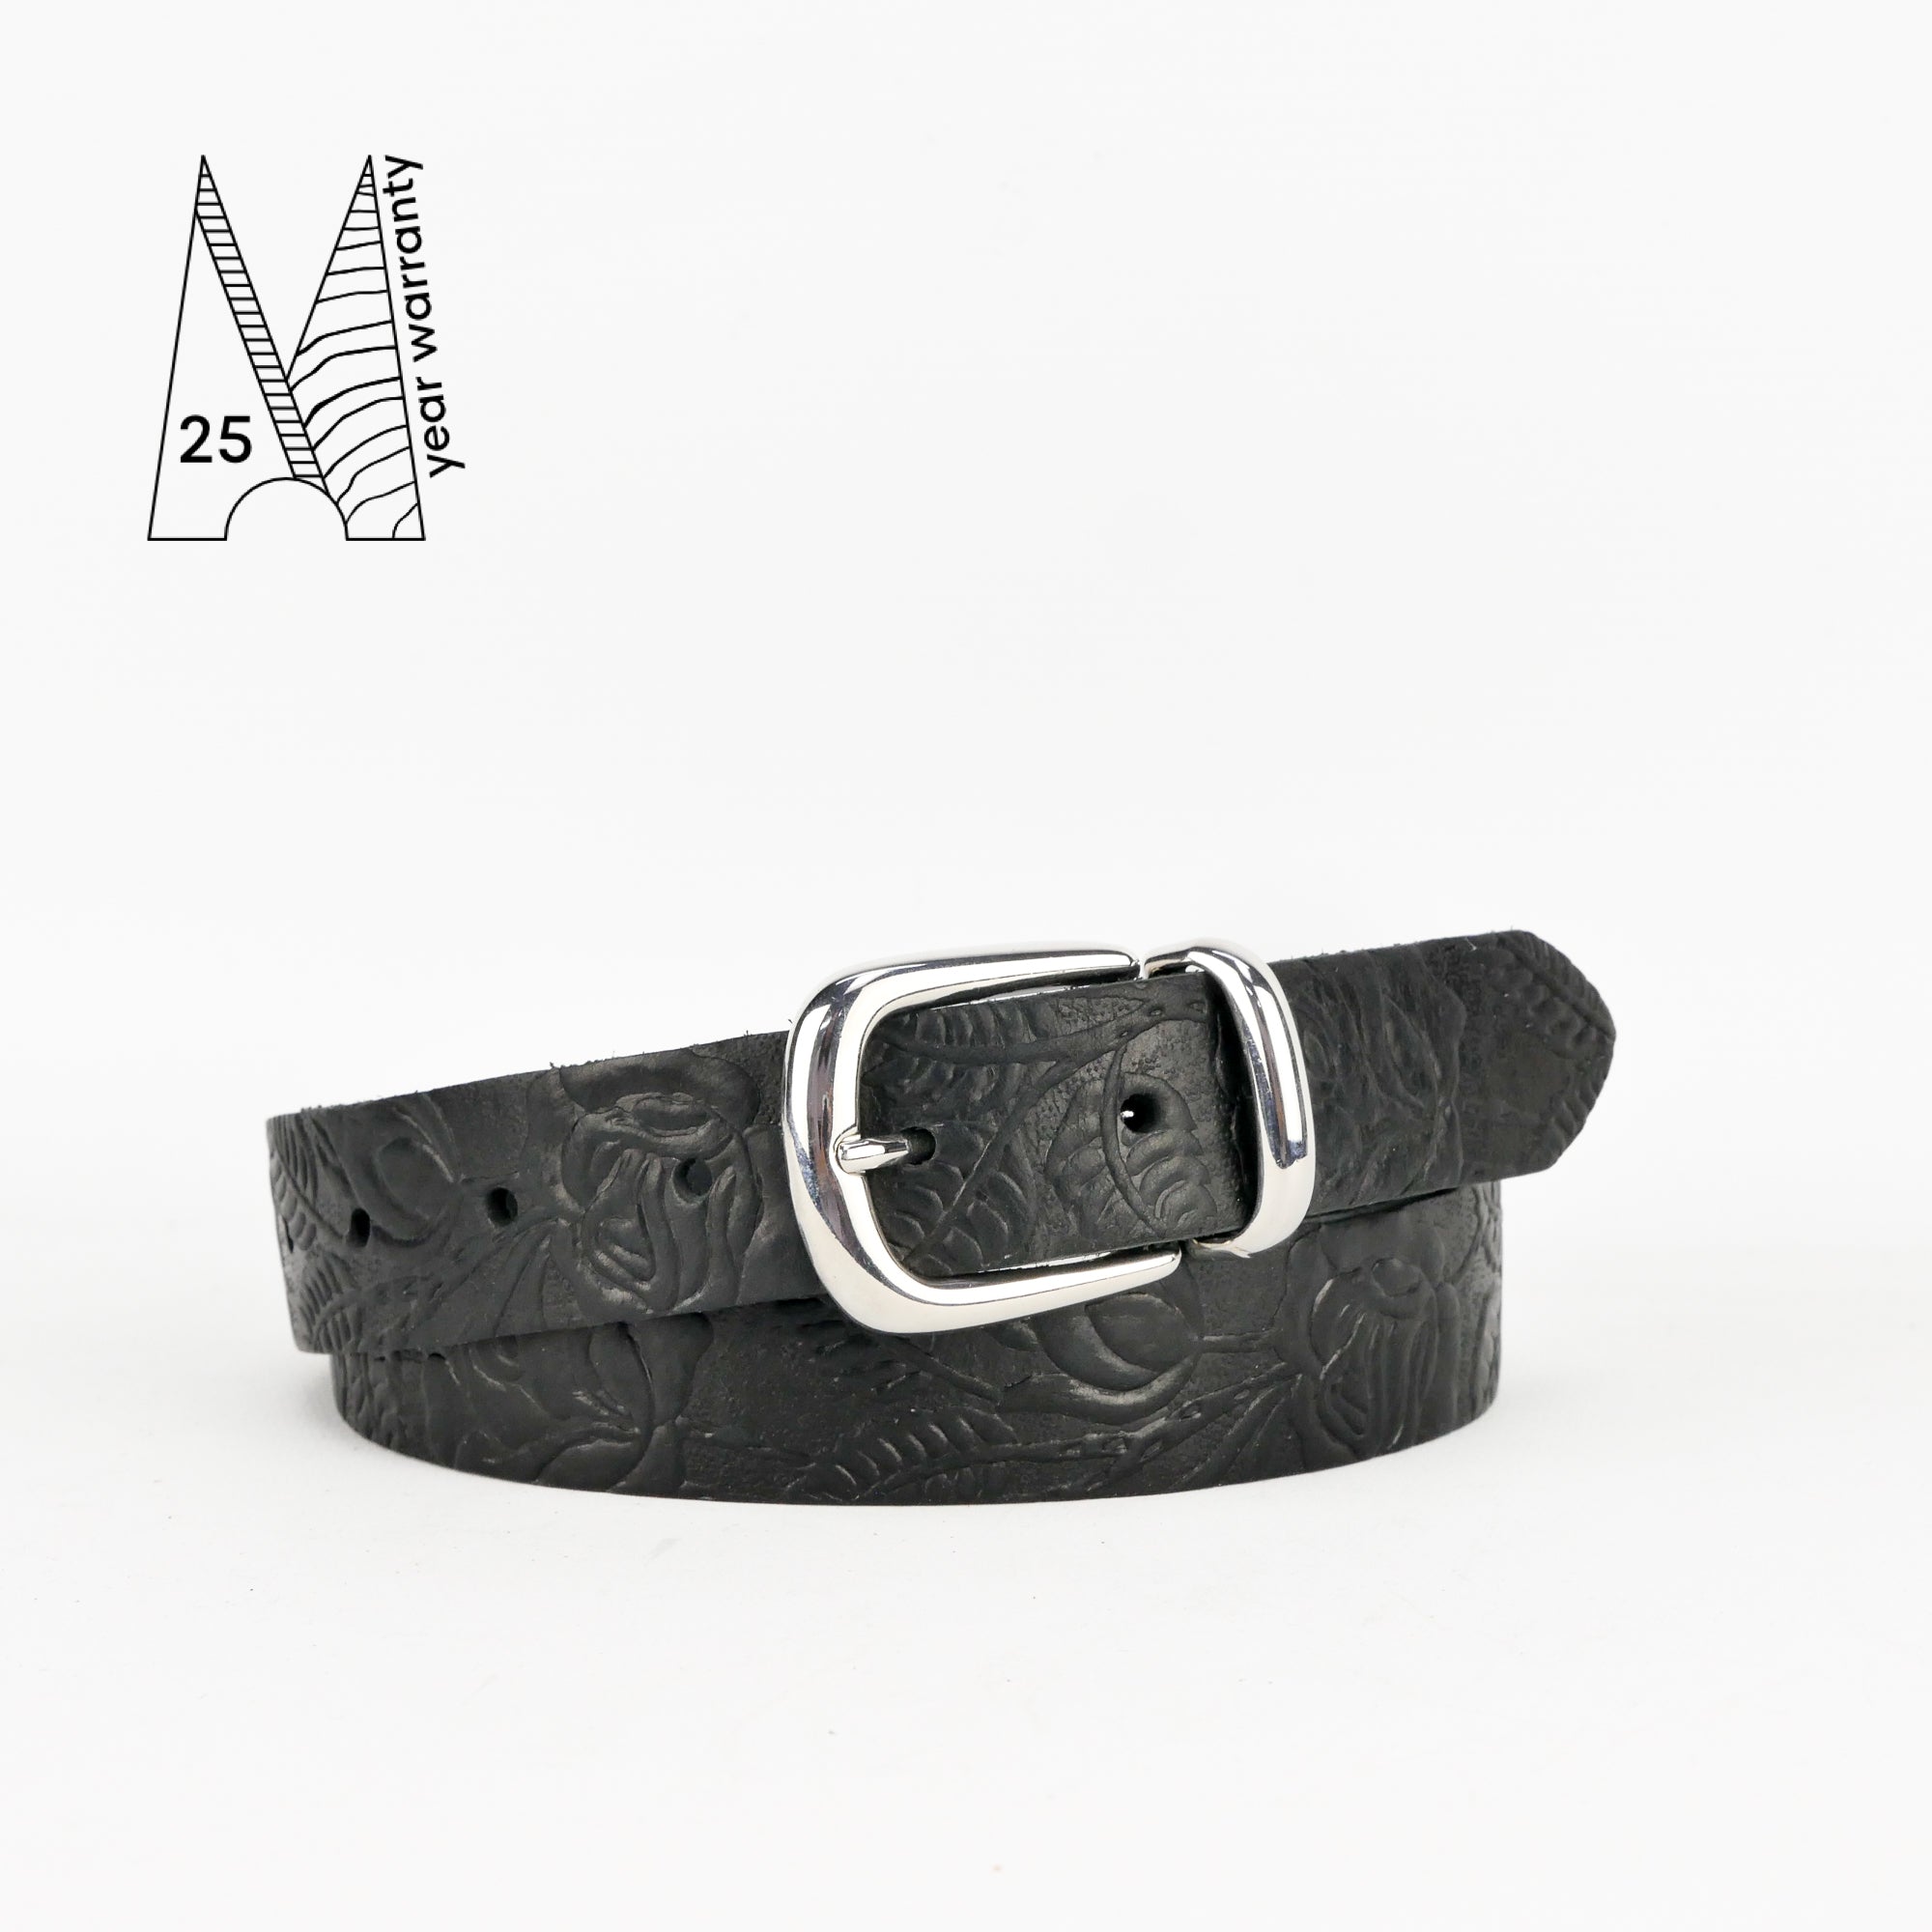 Buckle and Loop 1 1/8" Black Tooled Leather Belt